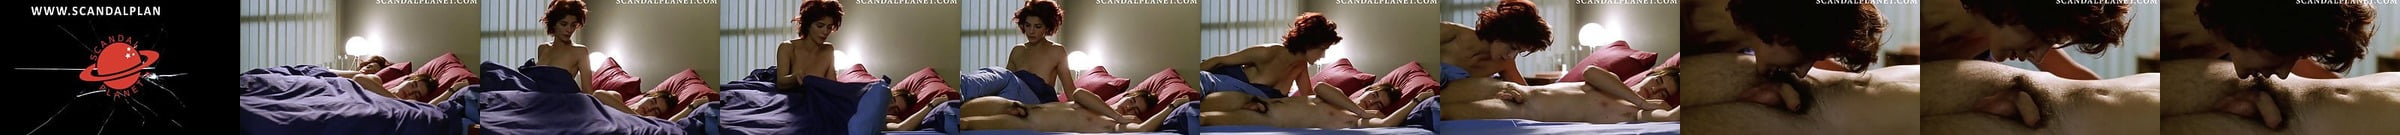 Kerry Fox Blowjob Scene On Scandalplanet Com Free Porn 27